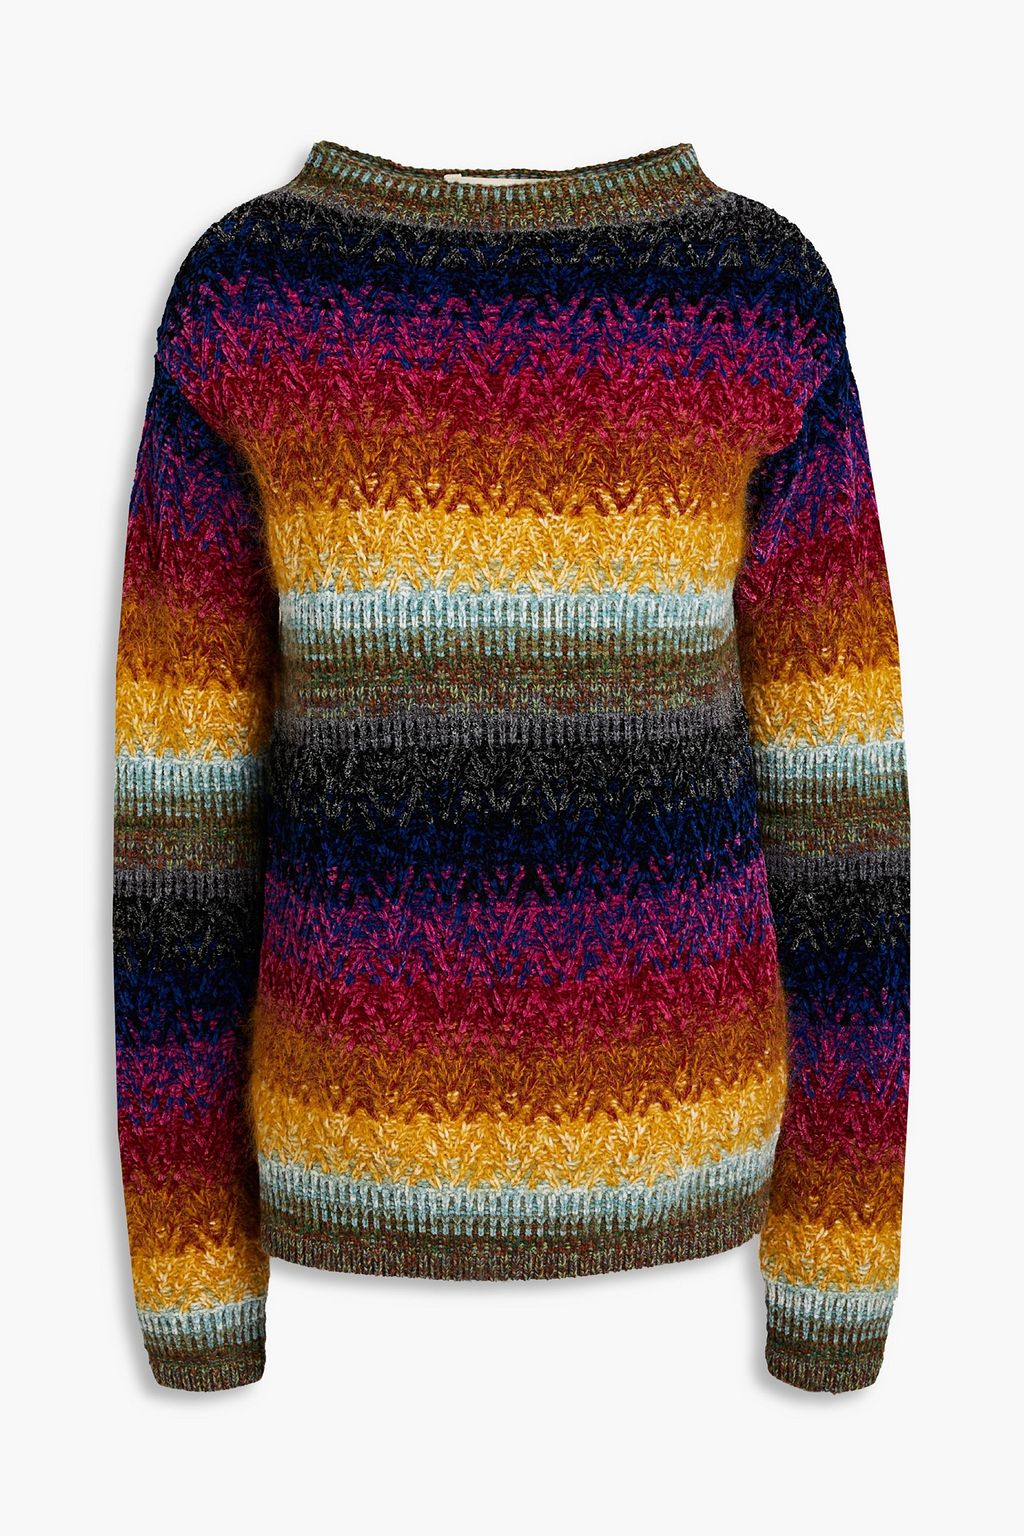 Полосатый свитер вязки интарсия MARNI, шафрановый полосатый свитер вязки интарсия marni шафрановый